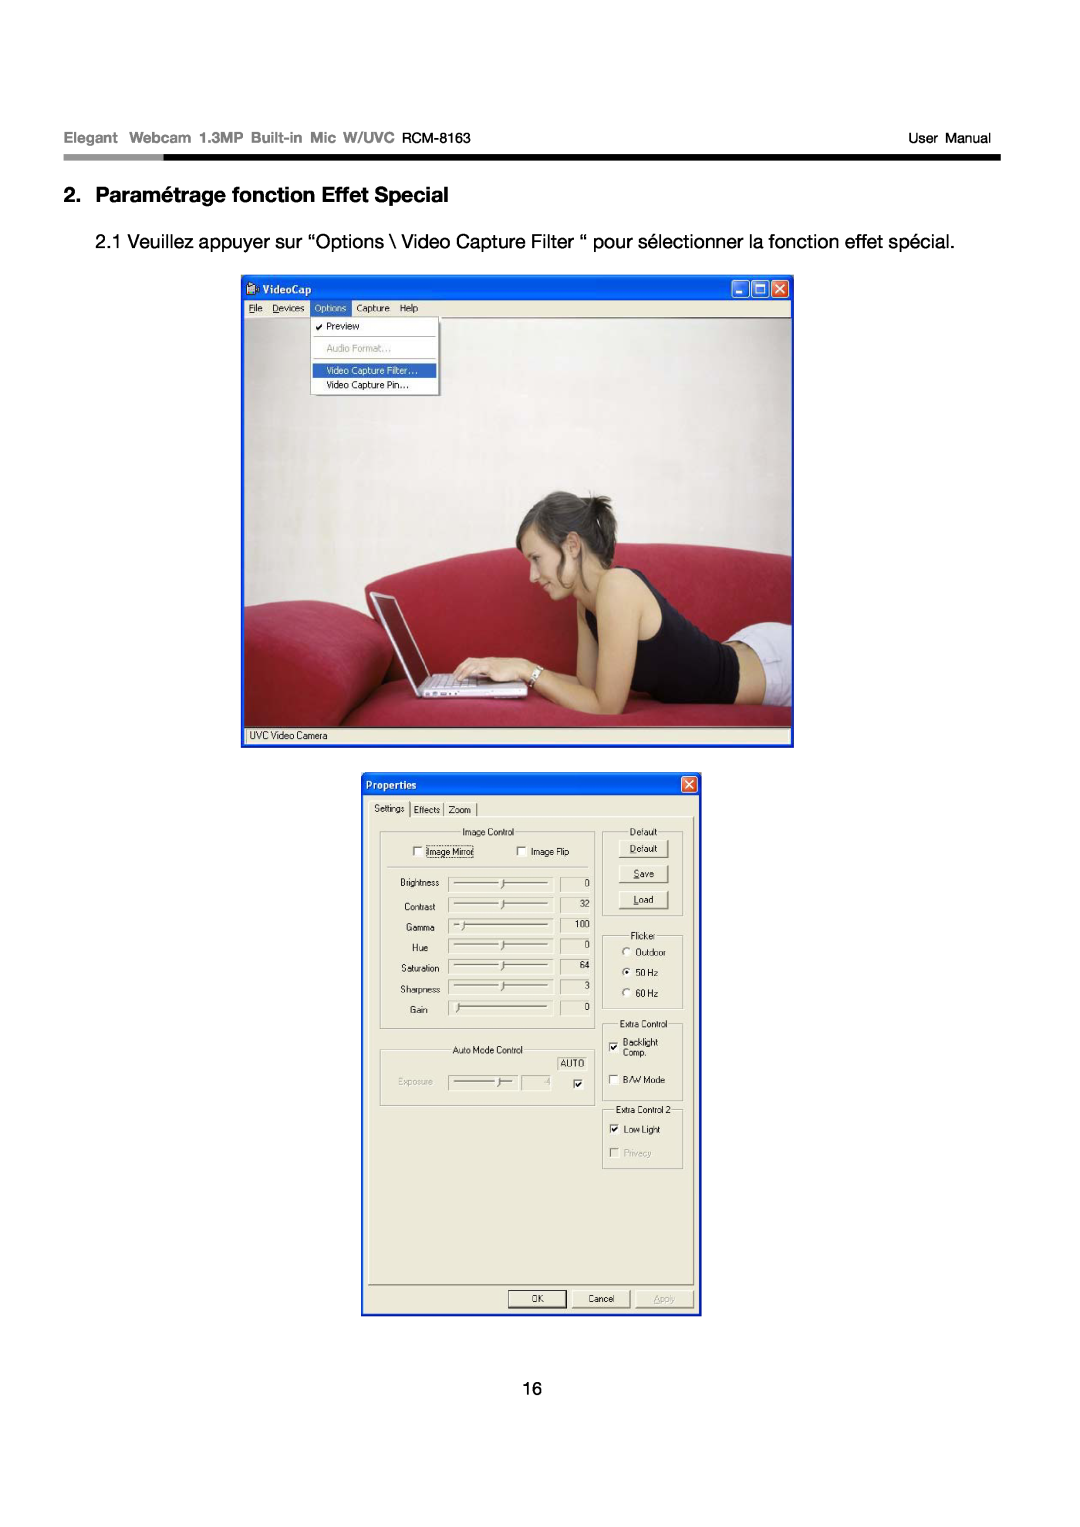 Rosewill user manual Paramétrage fonction Effet Special, Elegant Webcam 1.3MP Built-in Mic W/UVC RCM-8163, User Manual 